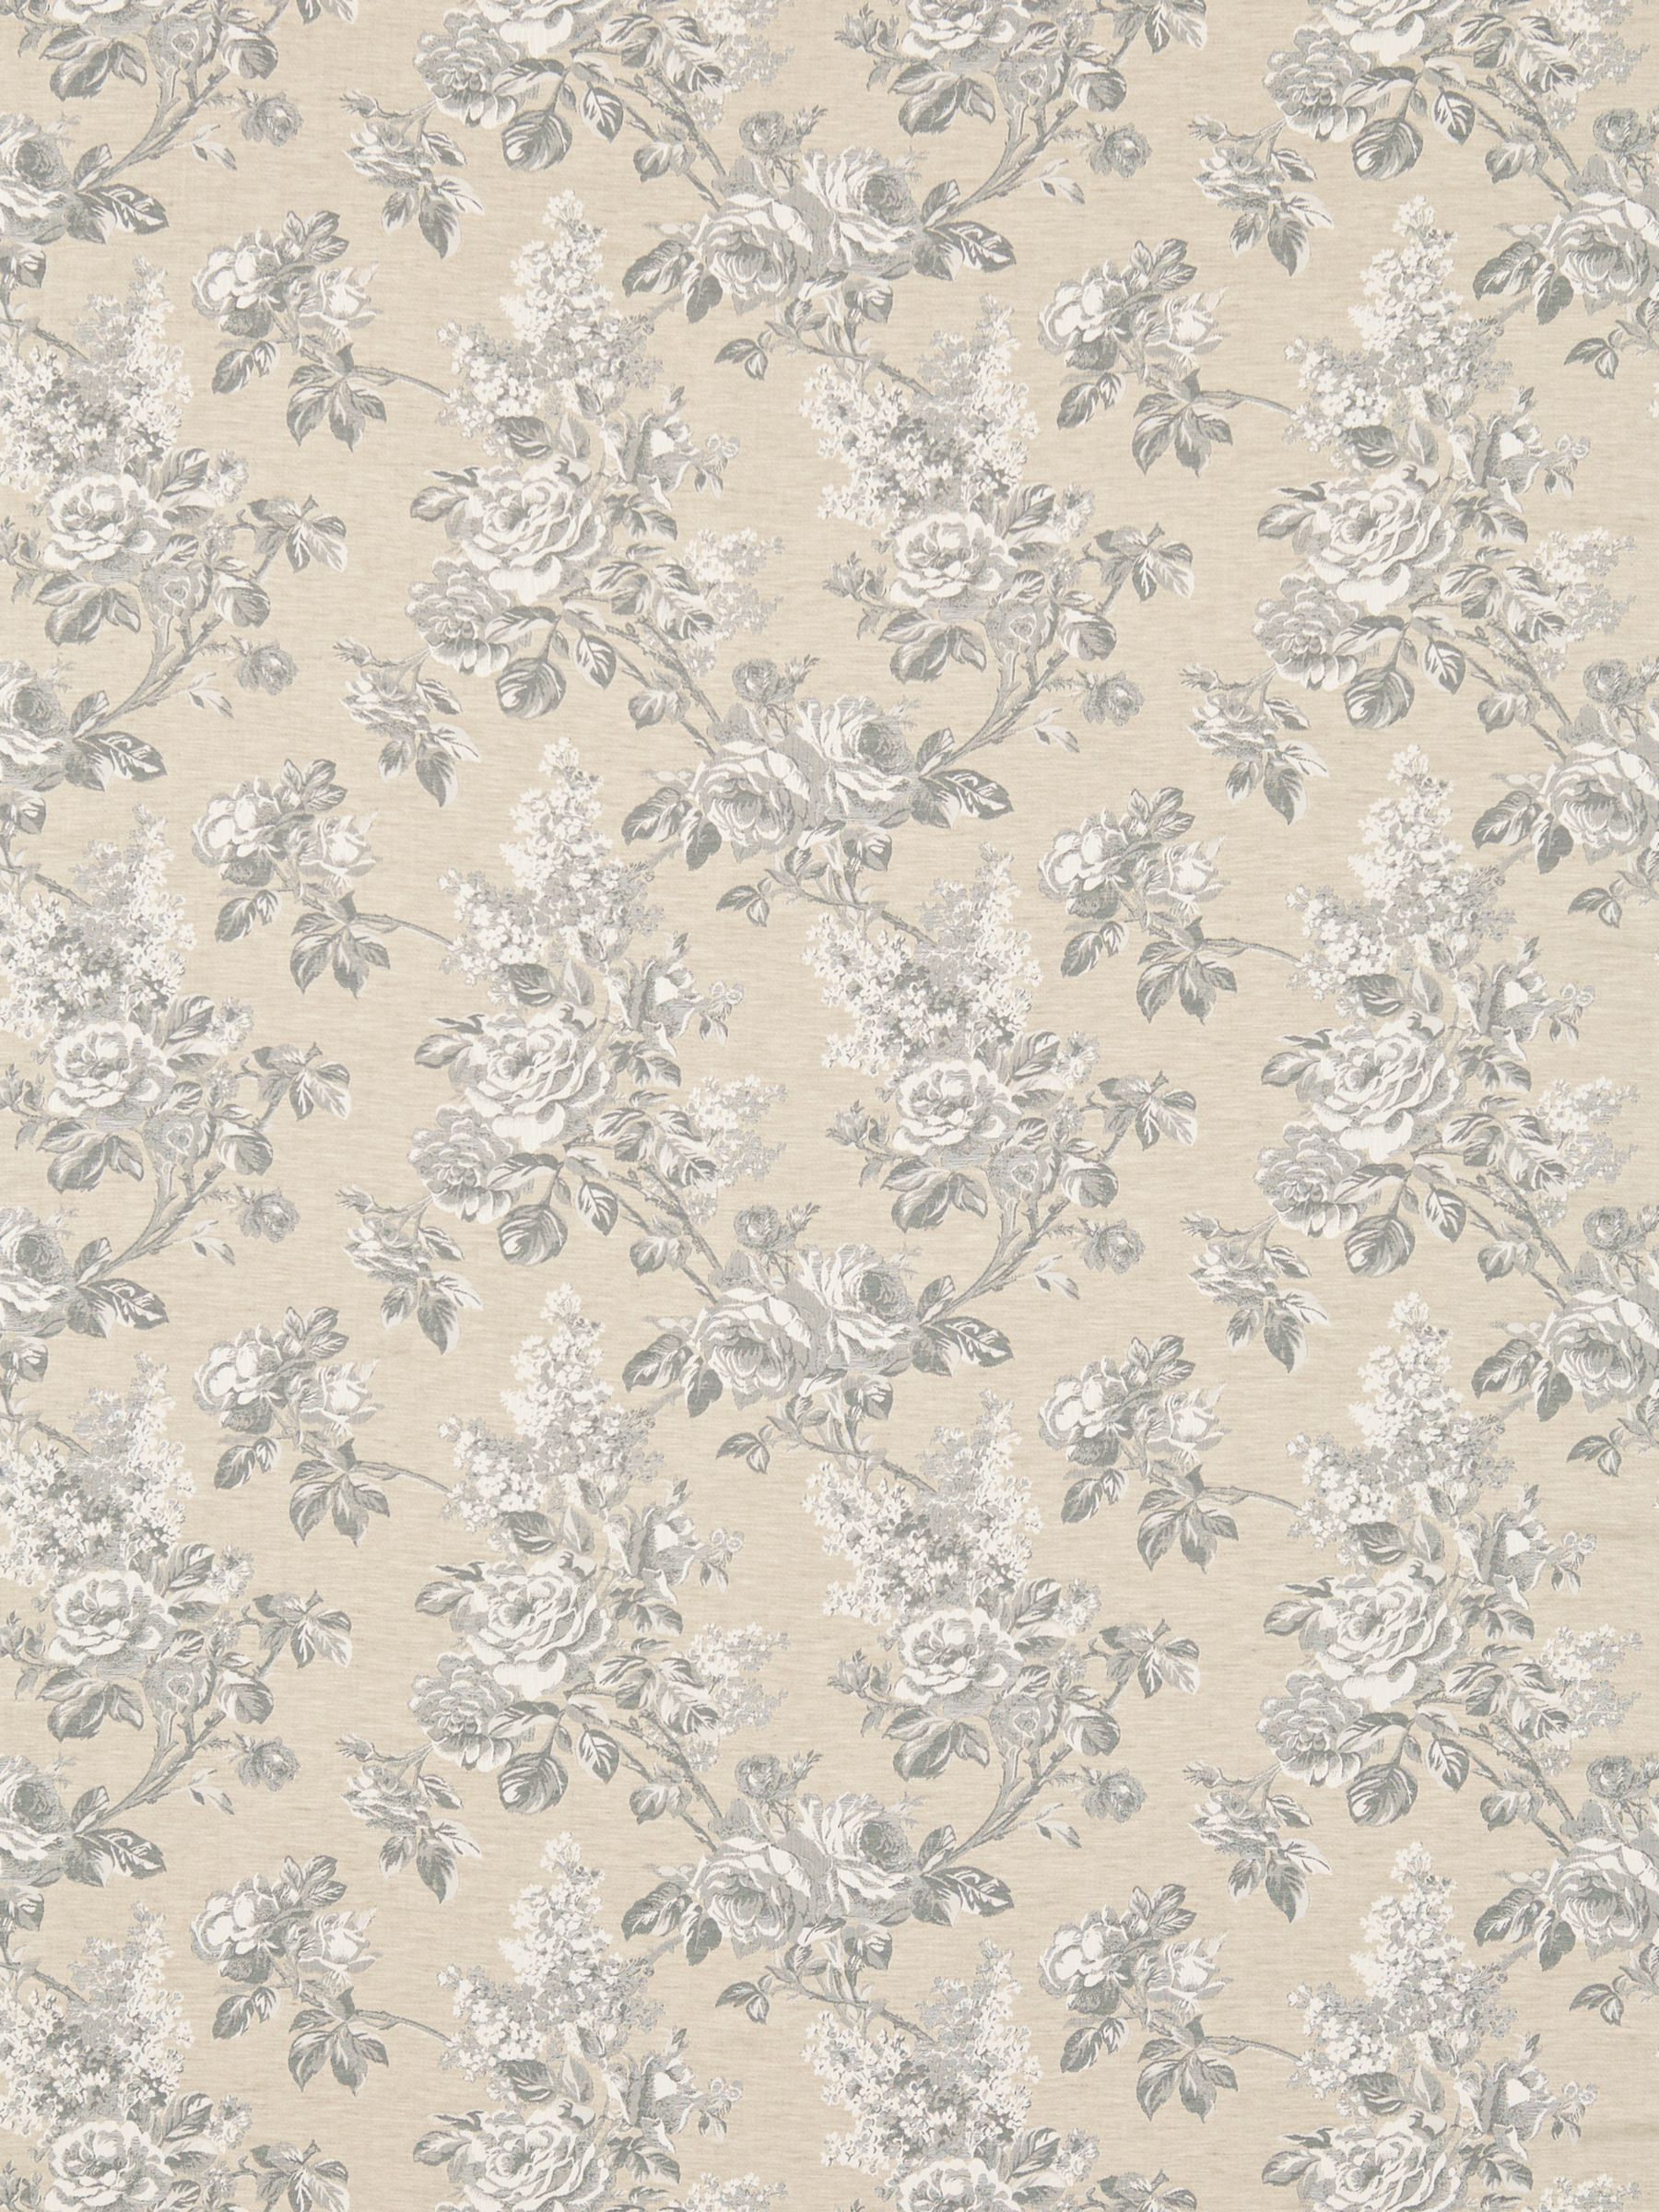 Sanderson Sorilla Damask Furnishing Fabric, Silver/Linen